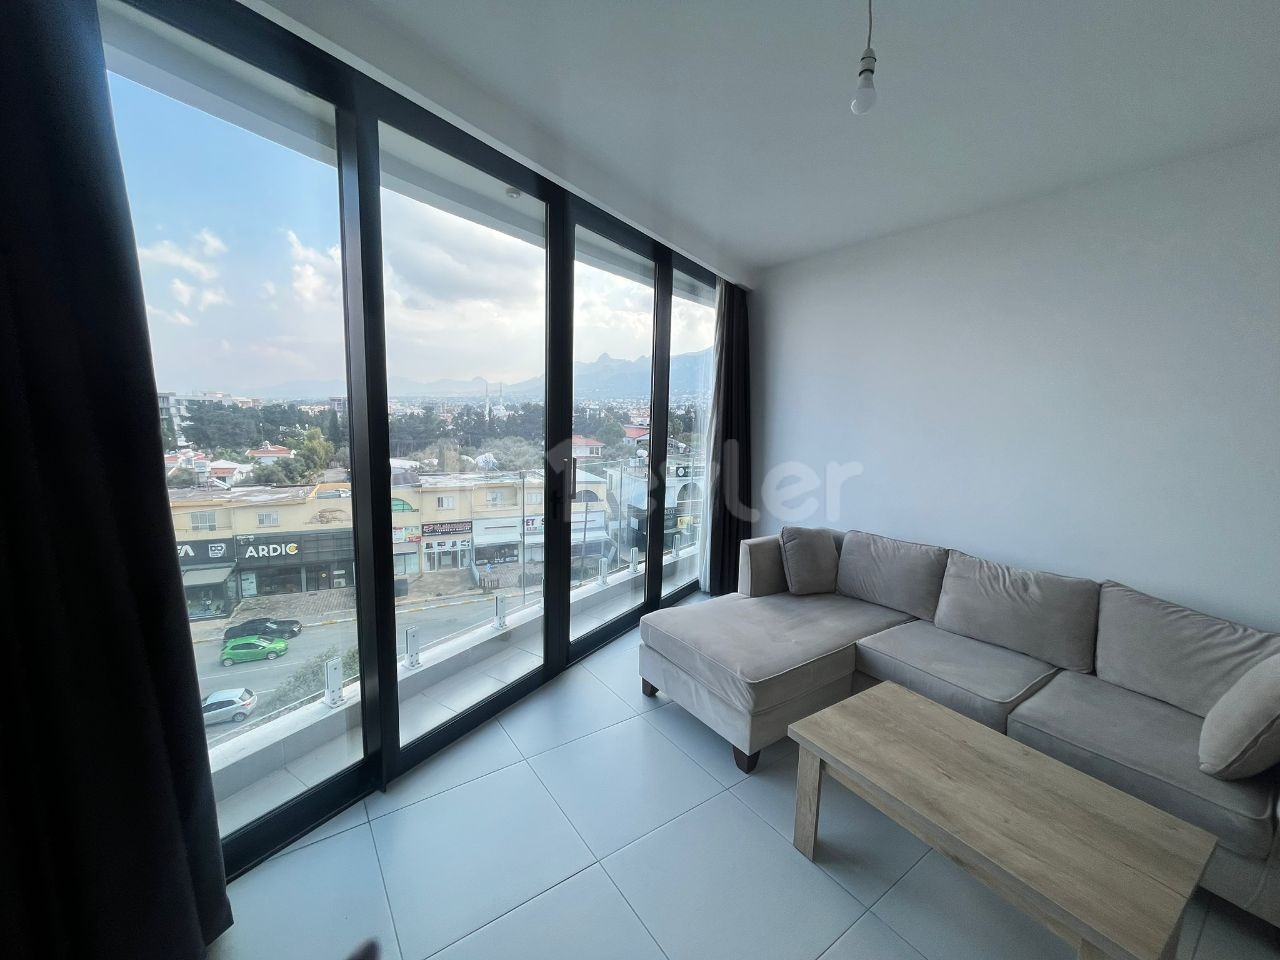 1 bedroom apartment for rent in Kyrenia Center 